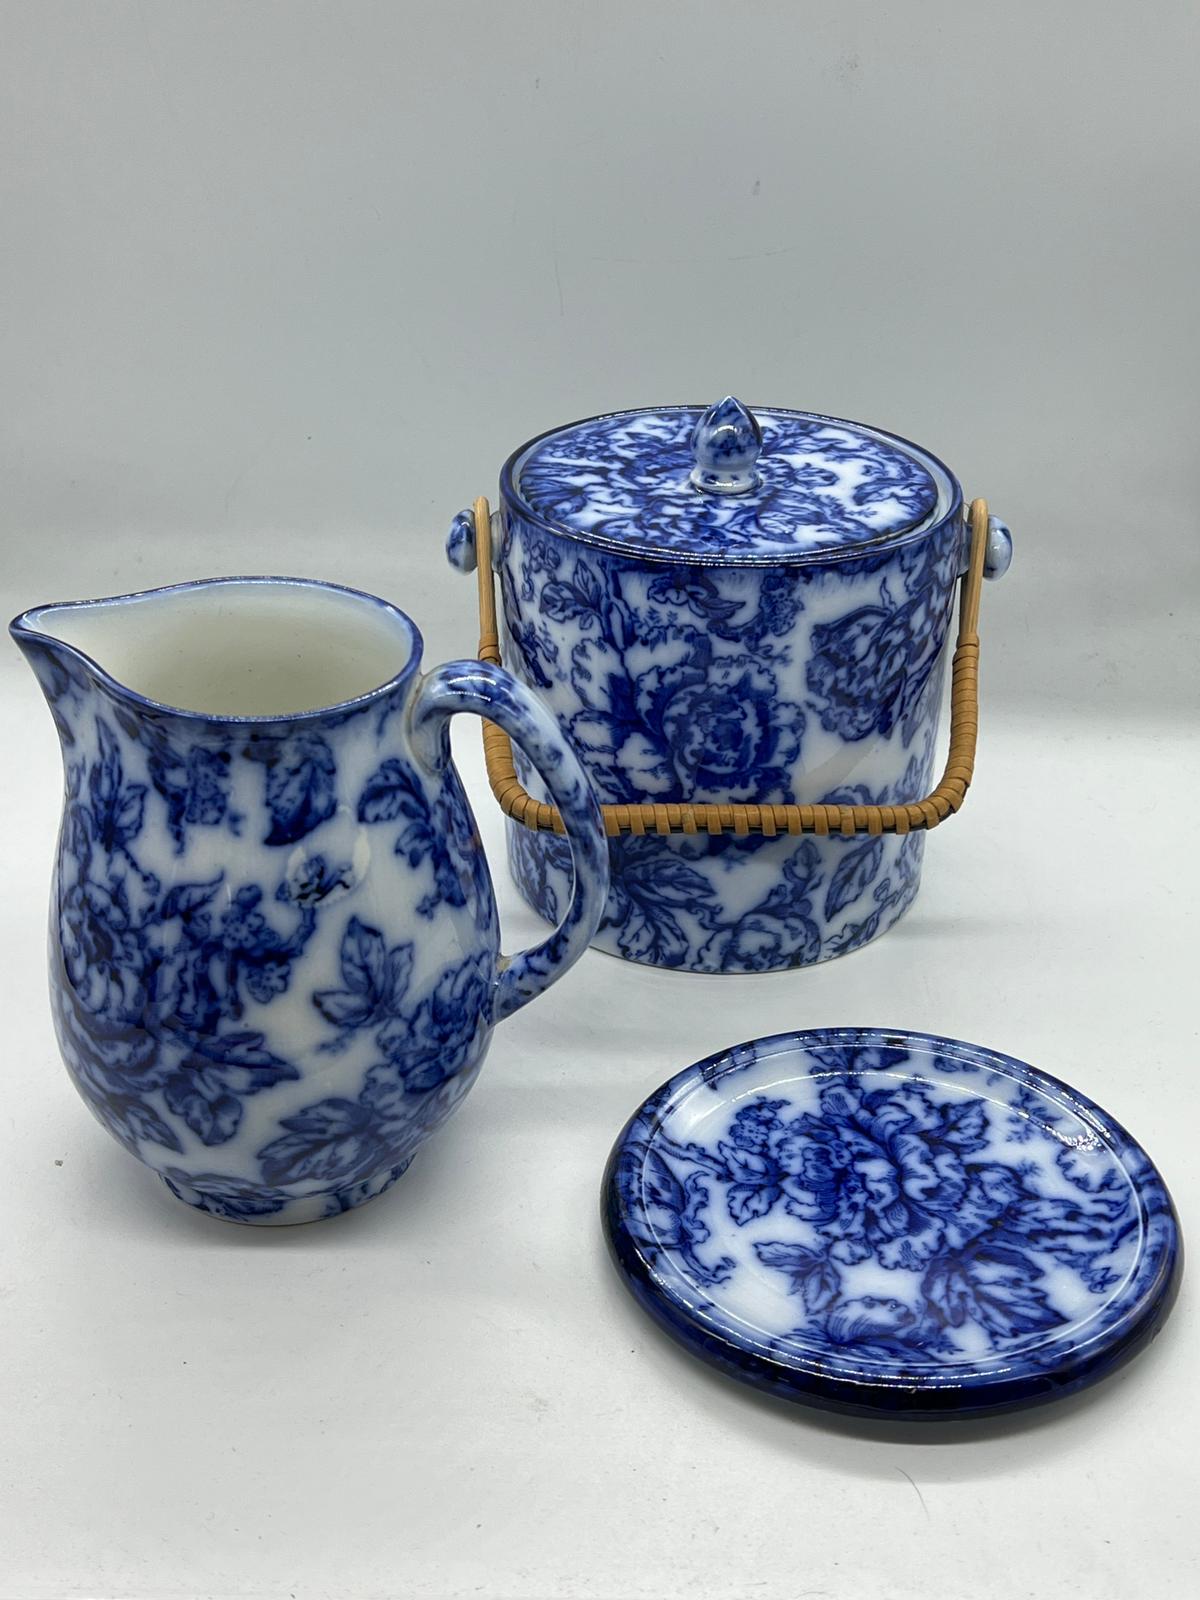 Blue and white porcelain jug, barrel jar and stand